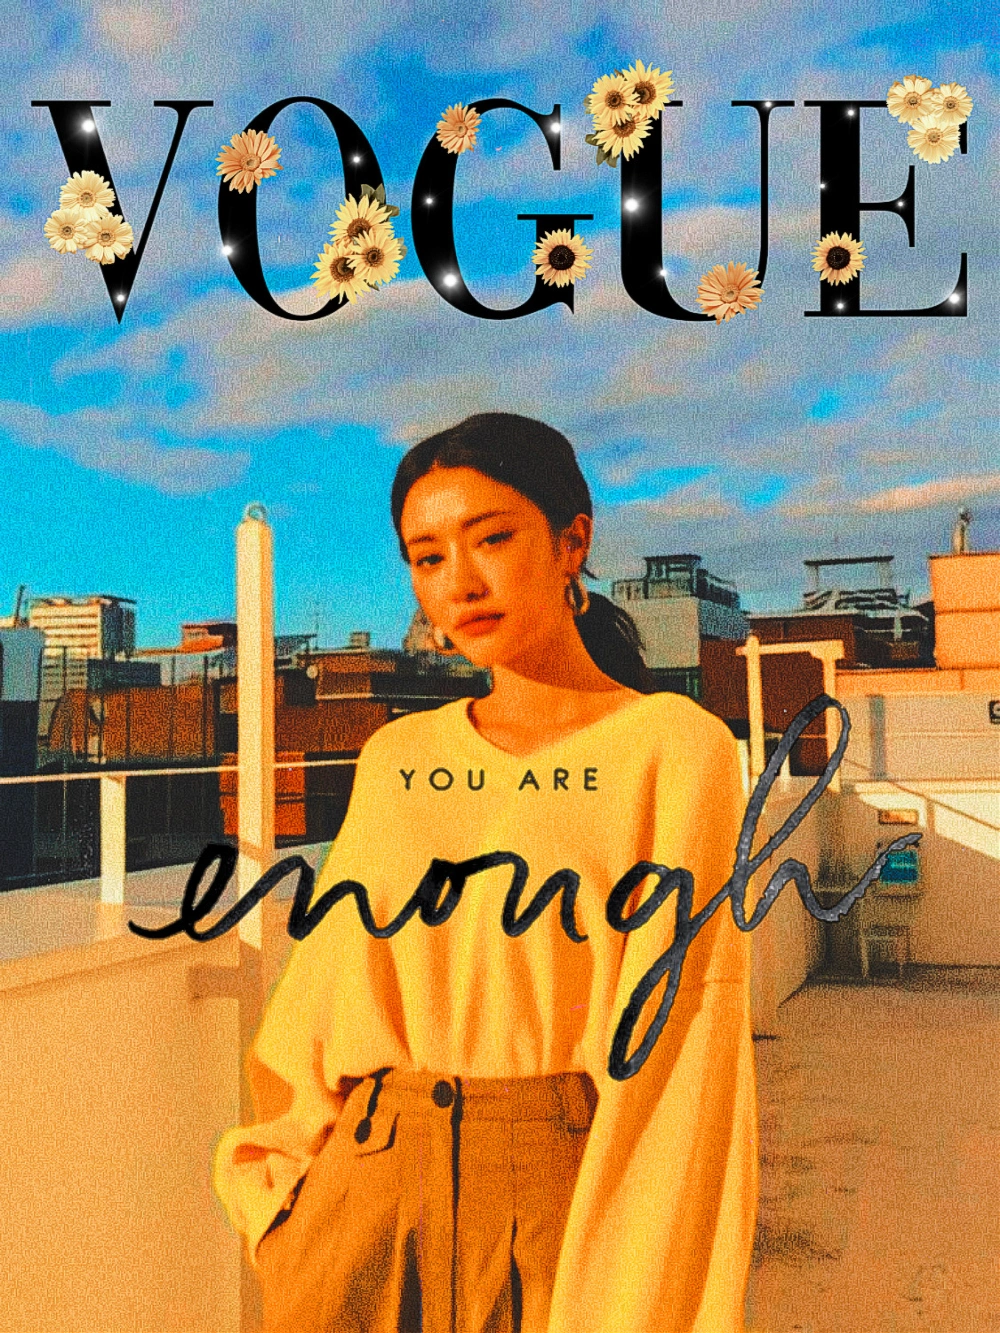 #voguechallenge #voguemagazine #vogue #voguecover